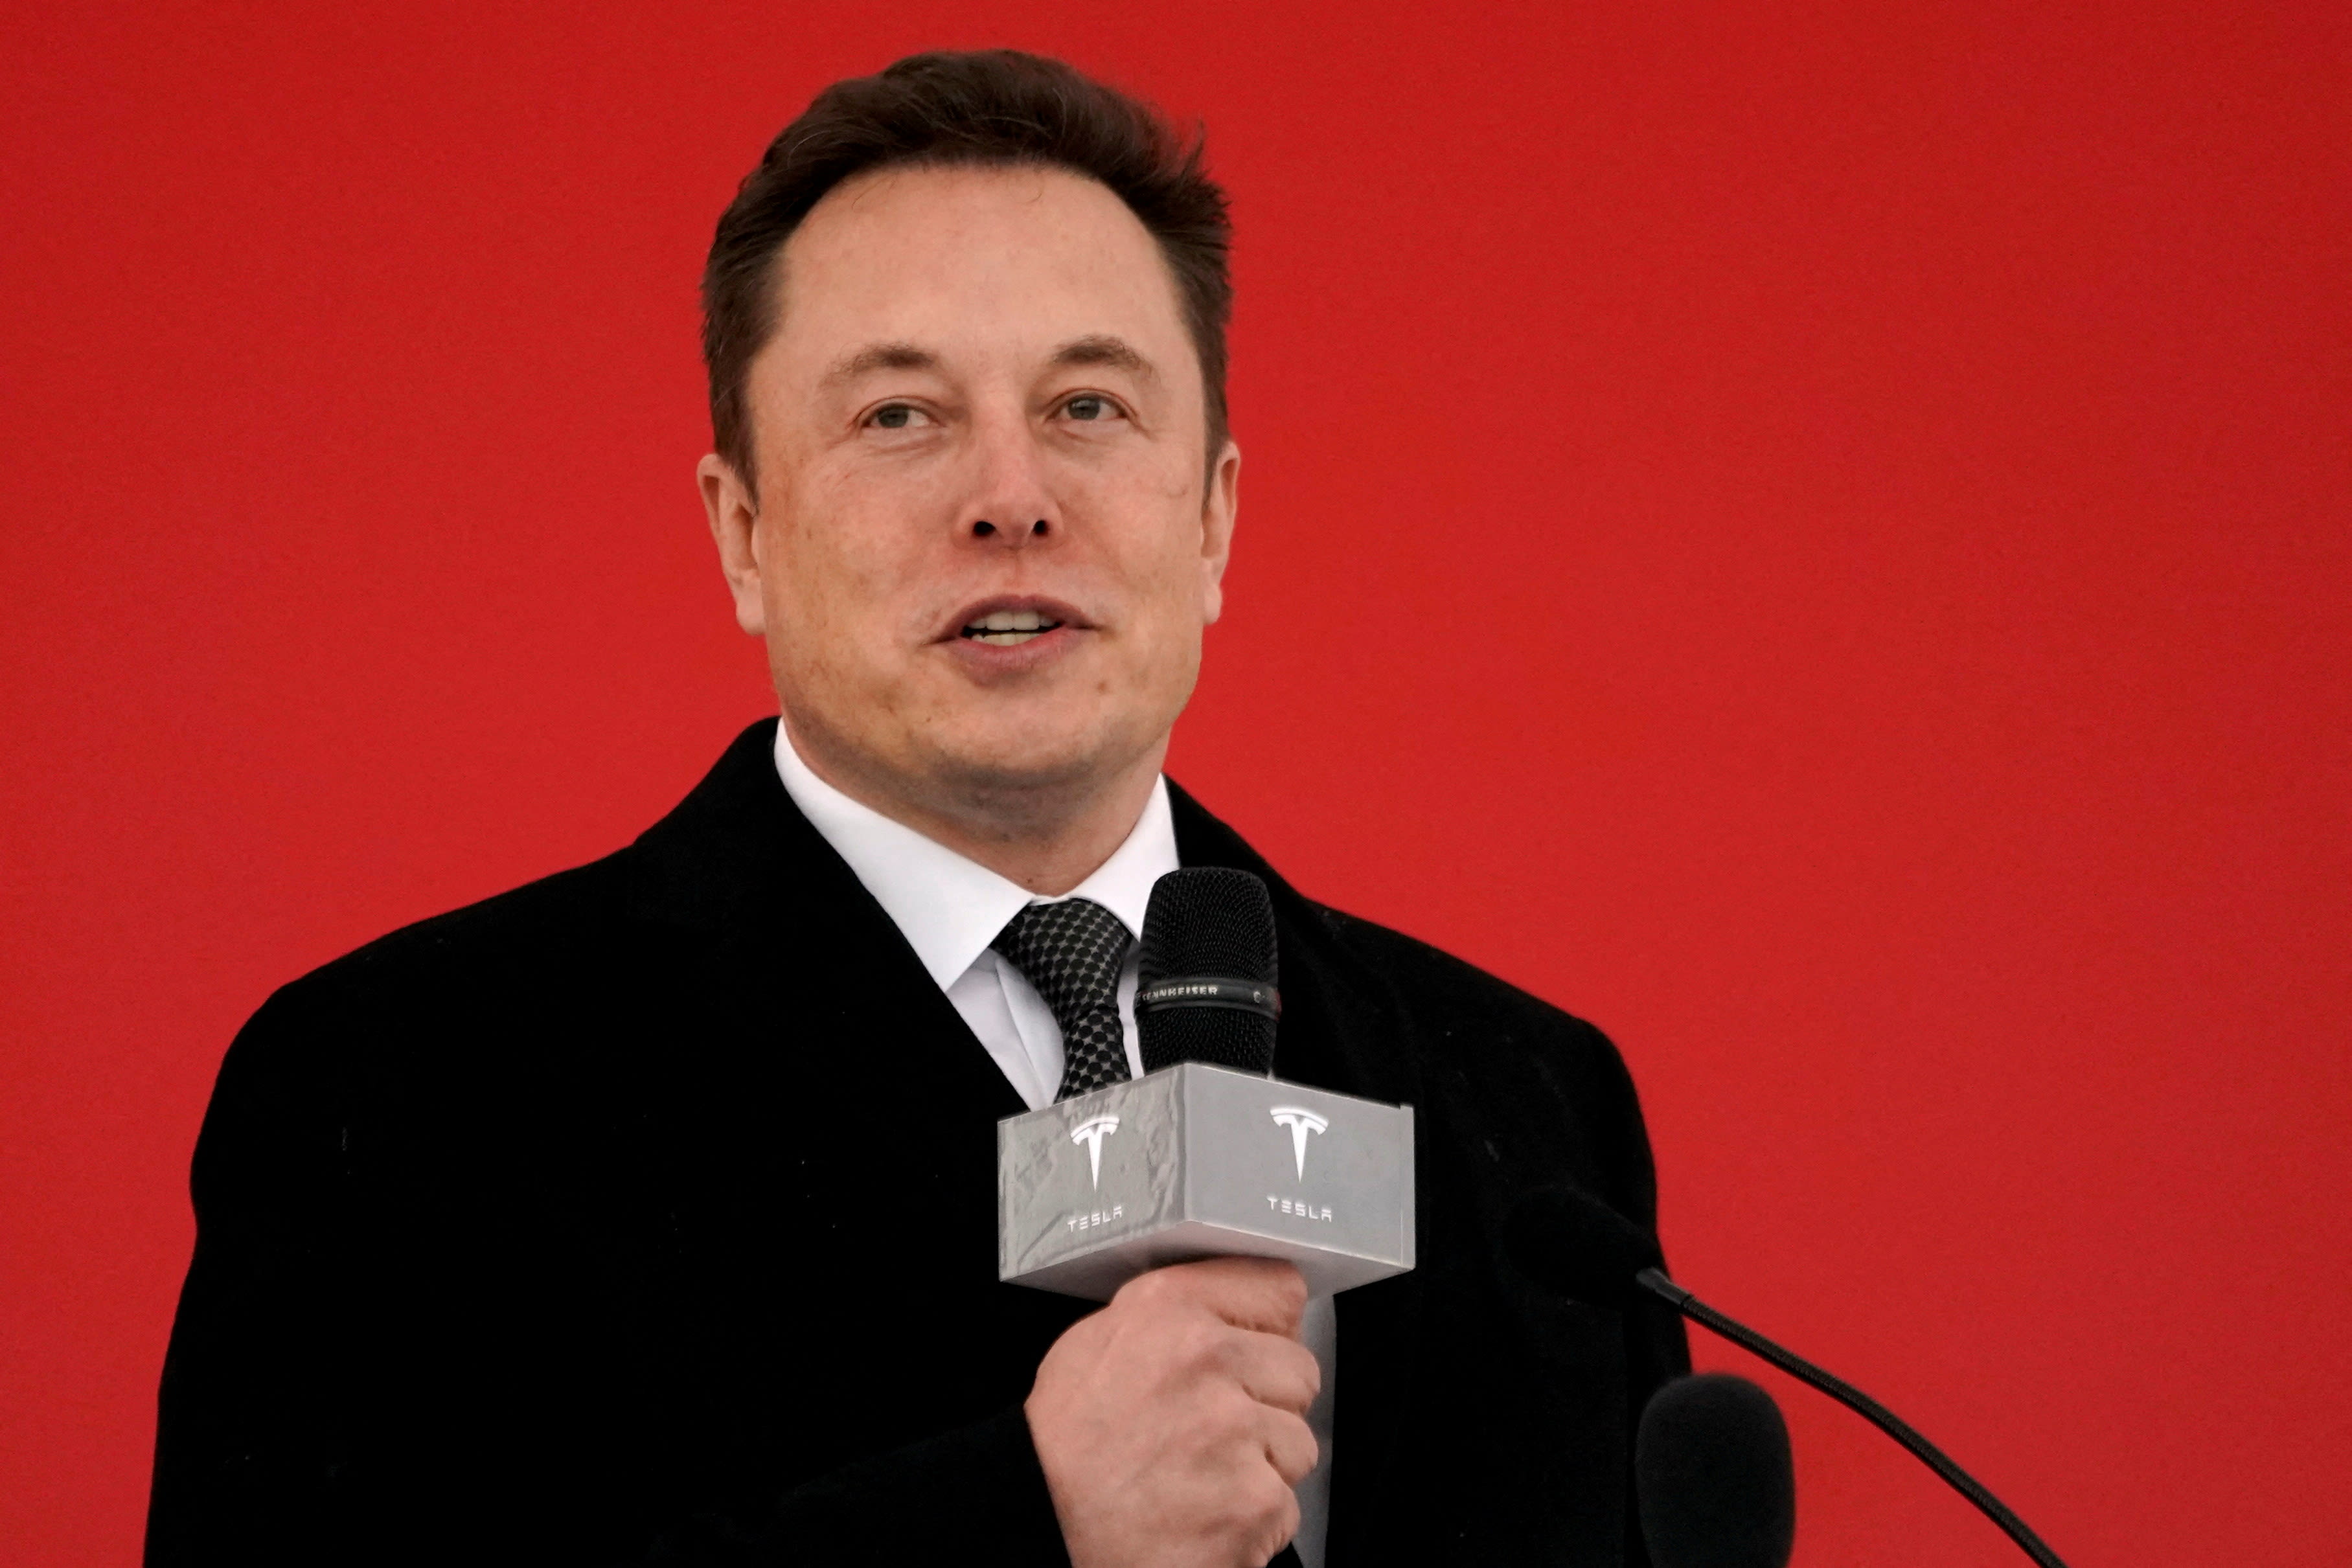 Tesla CEO Elon Musk attends the Tesla Shanghai Gigafactory groundbreaking ceremony in Shanghai, China on Jan 7, 2019. 
